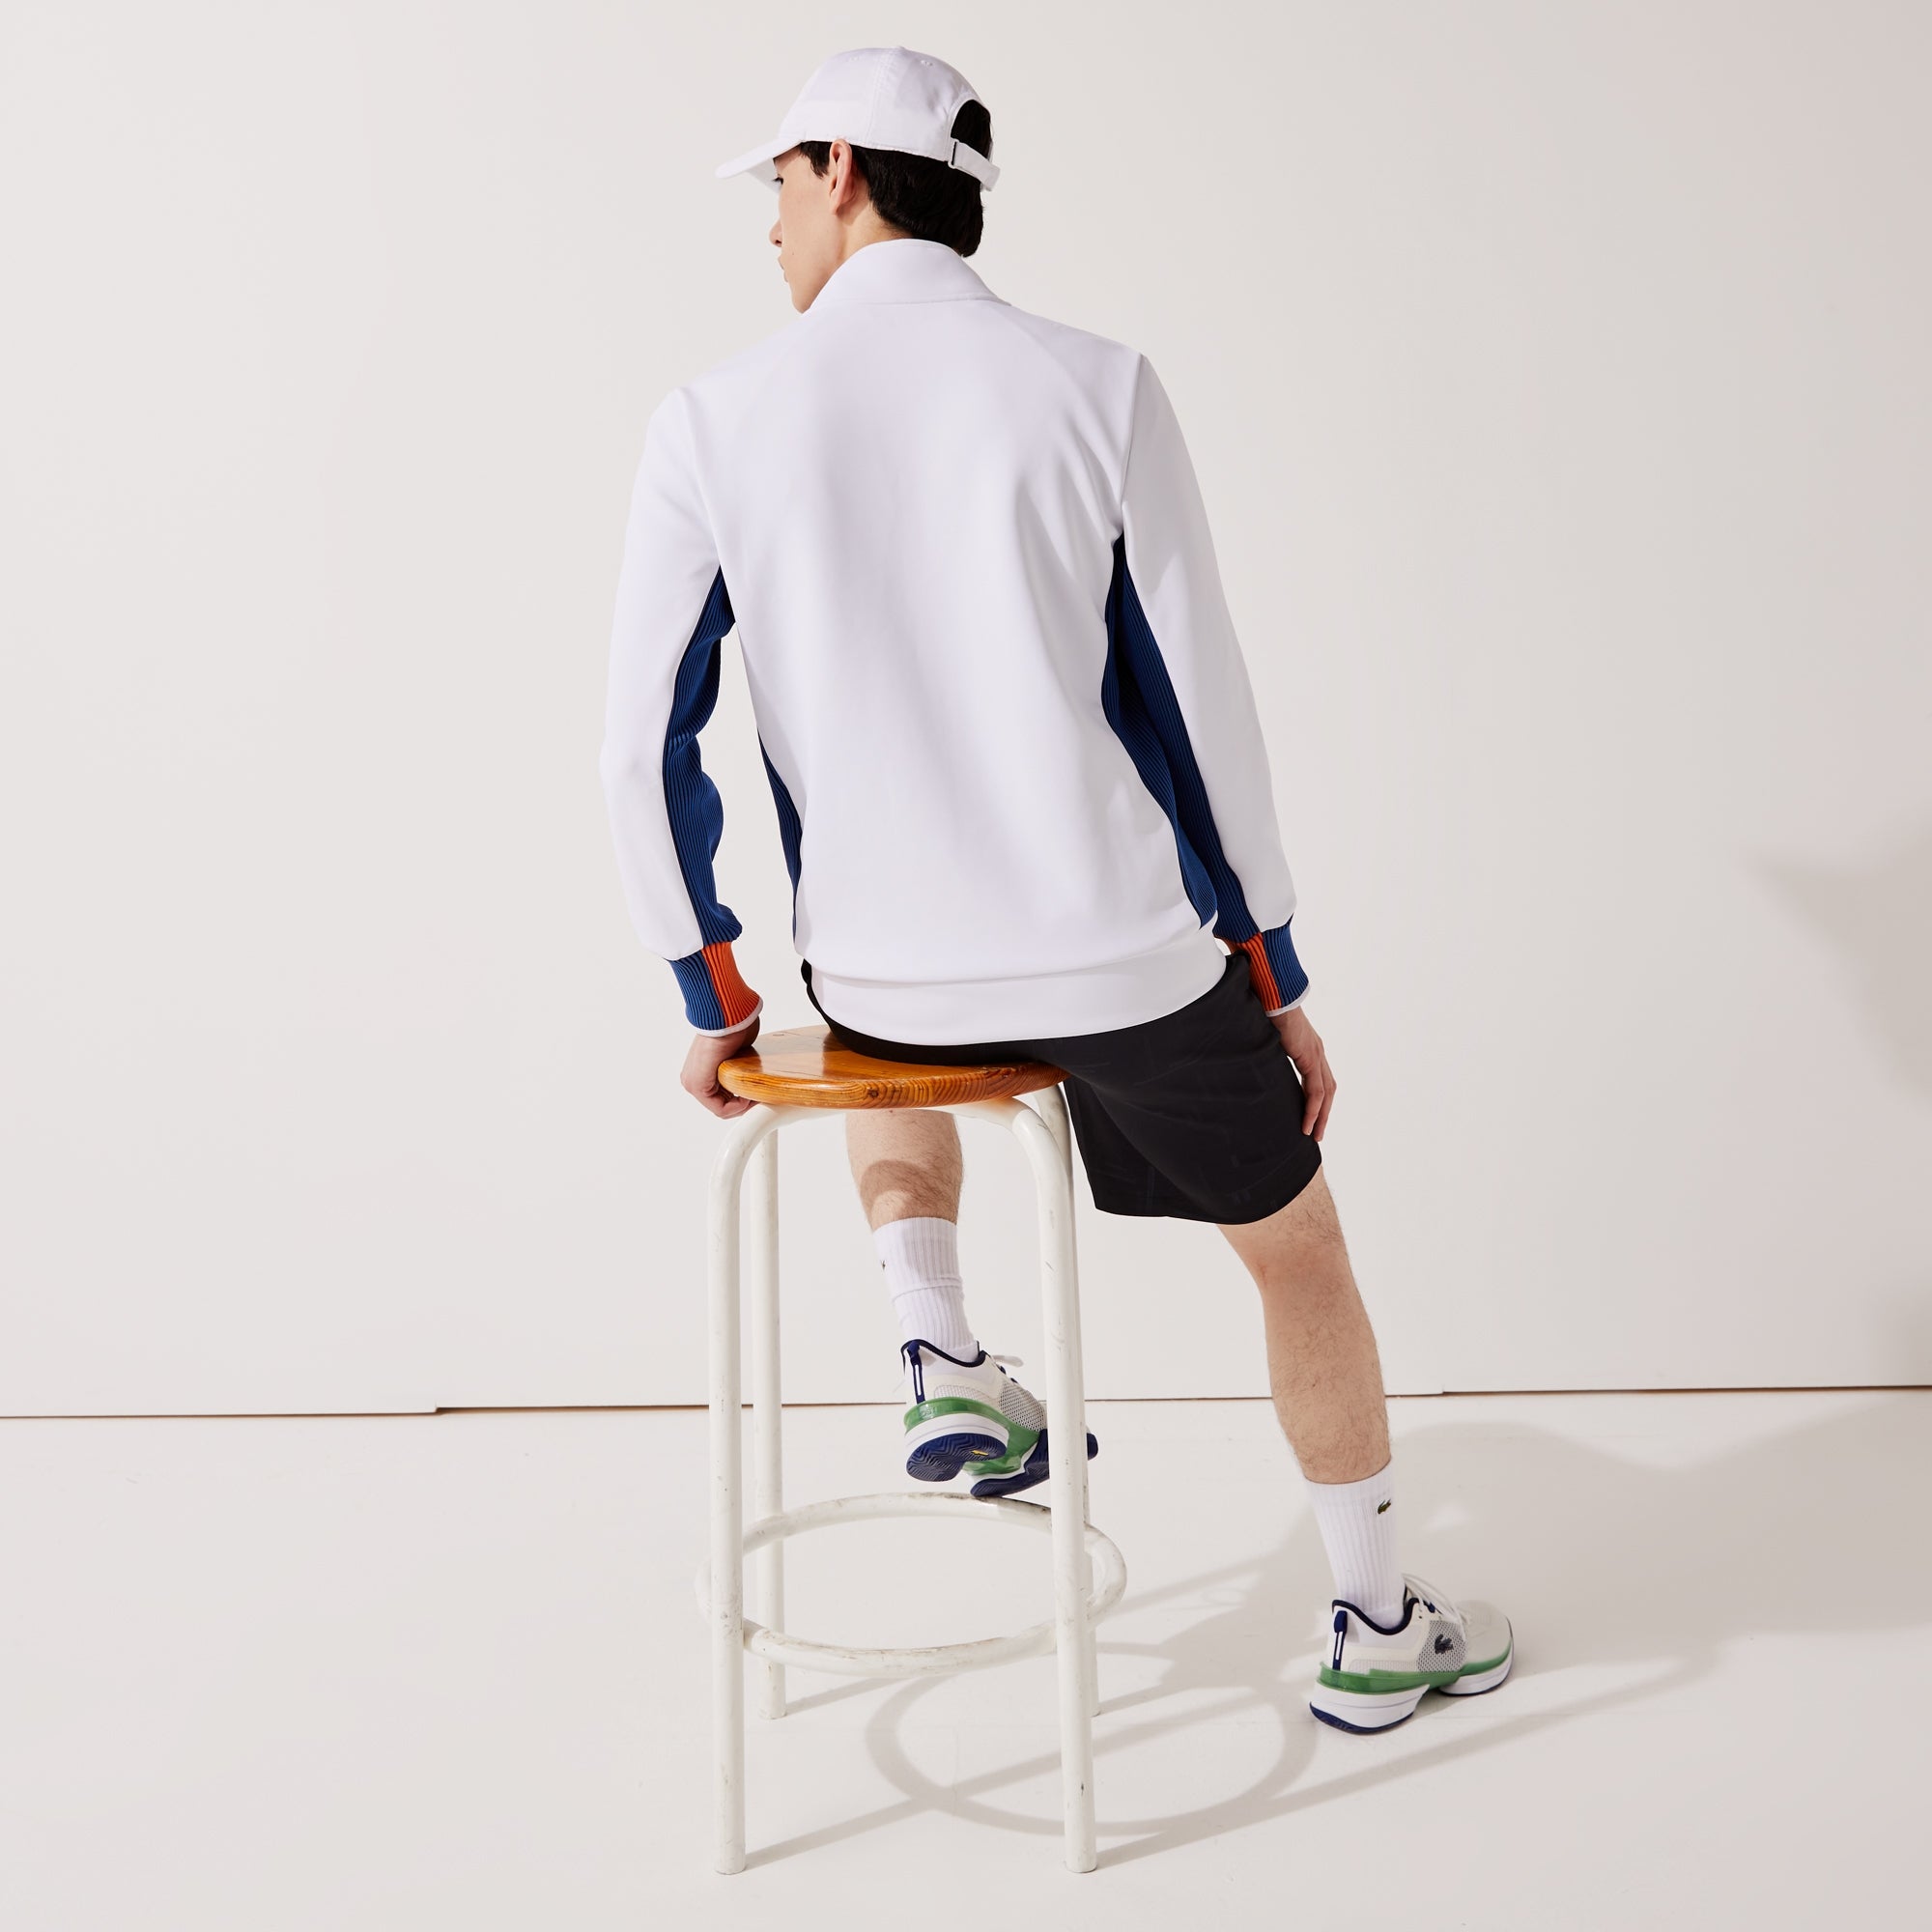 Lacoste Men's Tennis Jacket White (2)